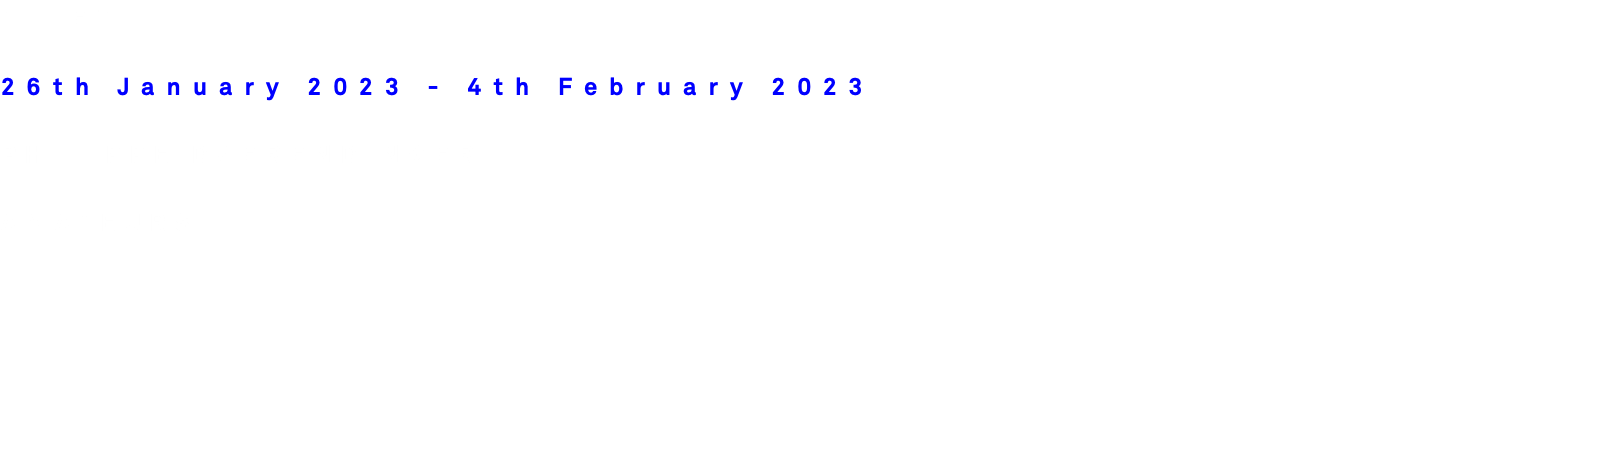 FILET 26th January 2022 - 4th February 2022 PHILIPPE DAERENDINGER AMATEURS 